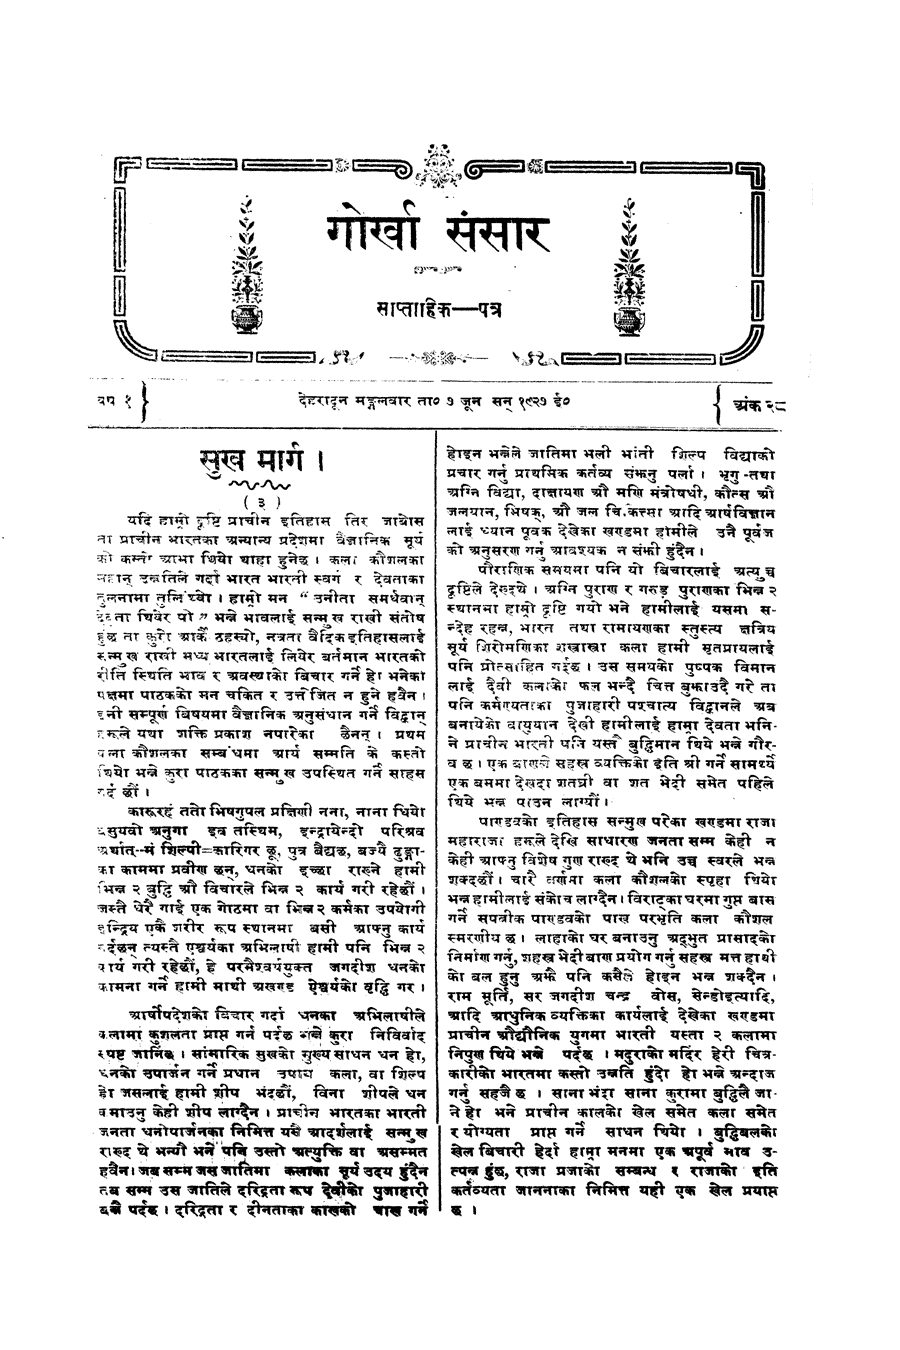 Gorkha Sansar, 7 June 1927, page 3